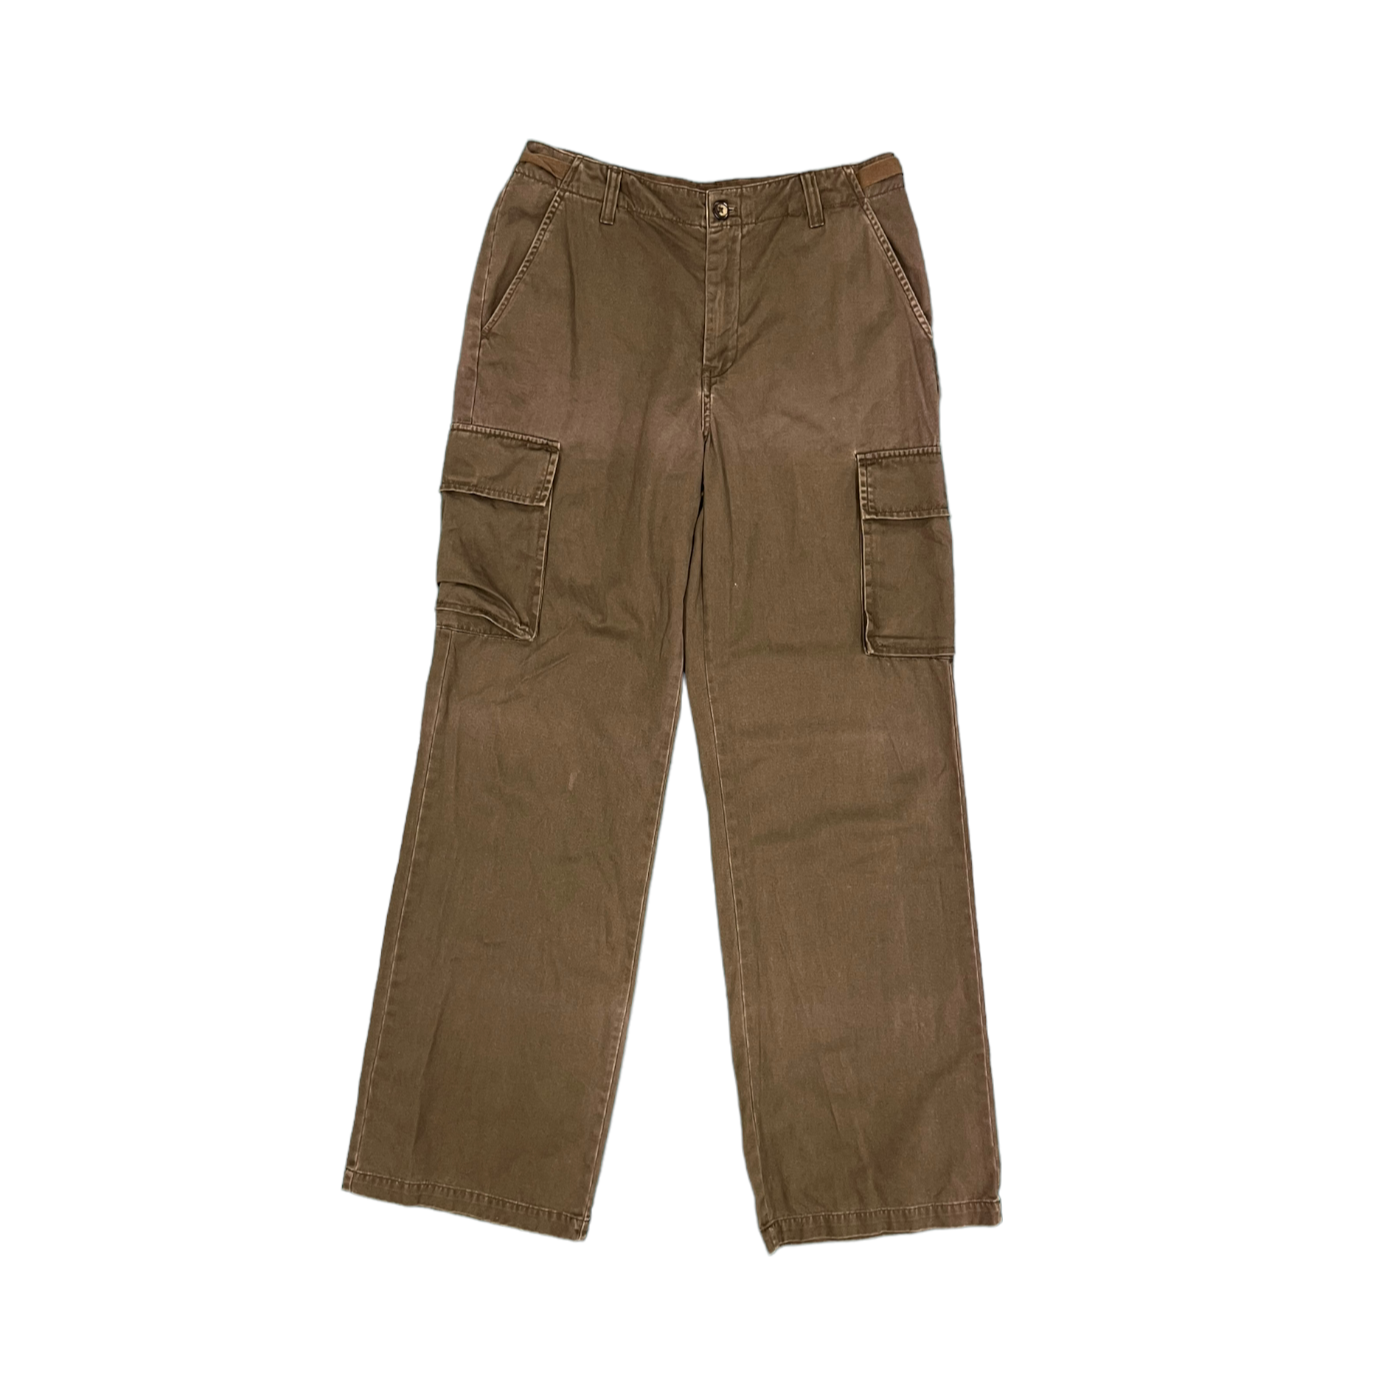 Womens Khaki Cargo Trousers - Waist 28" Length 30"